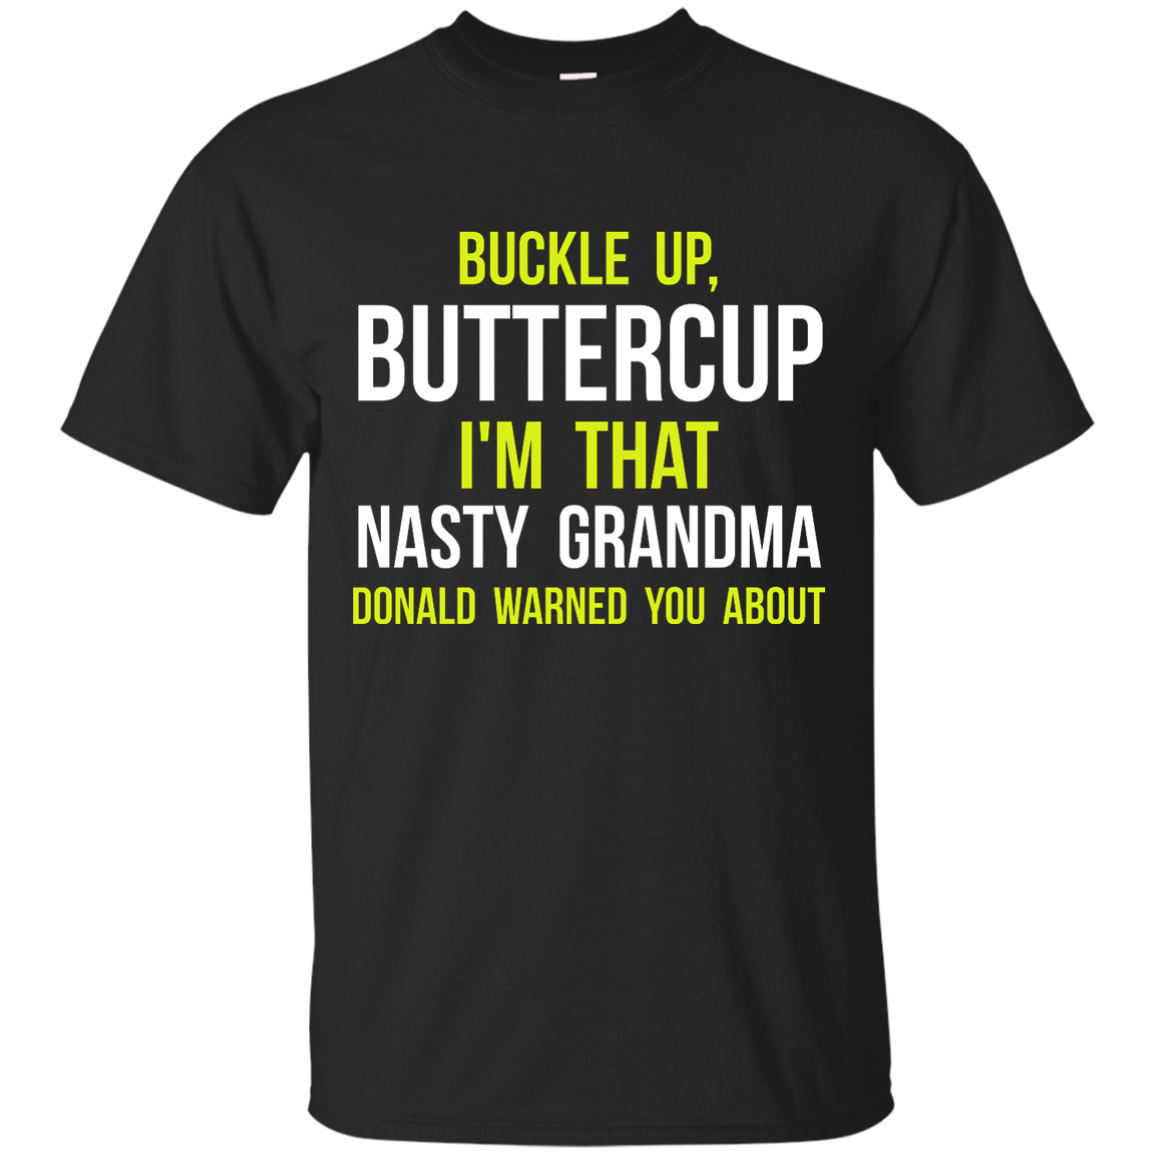 Buckle up, Buttercup: I'm that nasty grandma Donald warned shirt